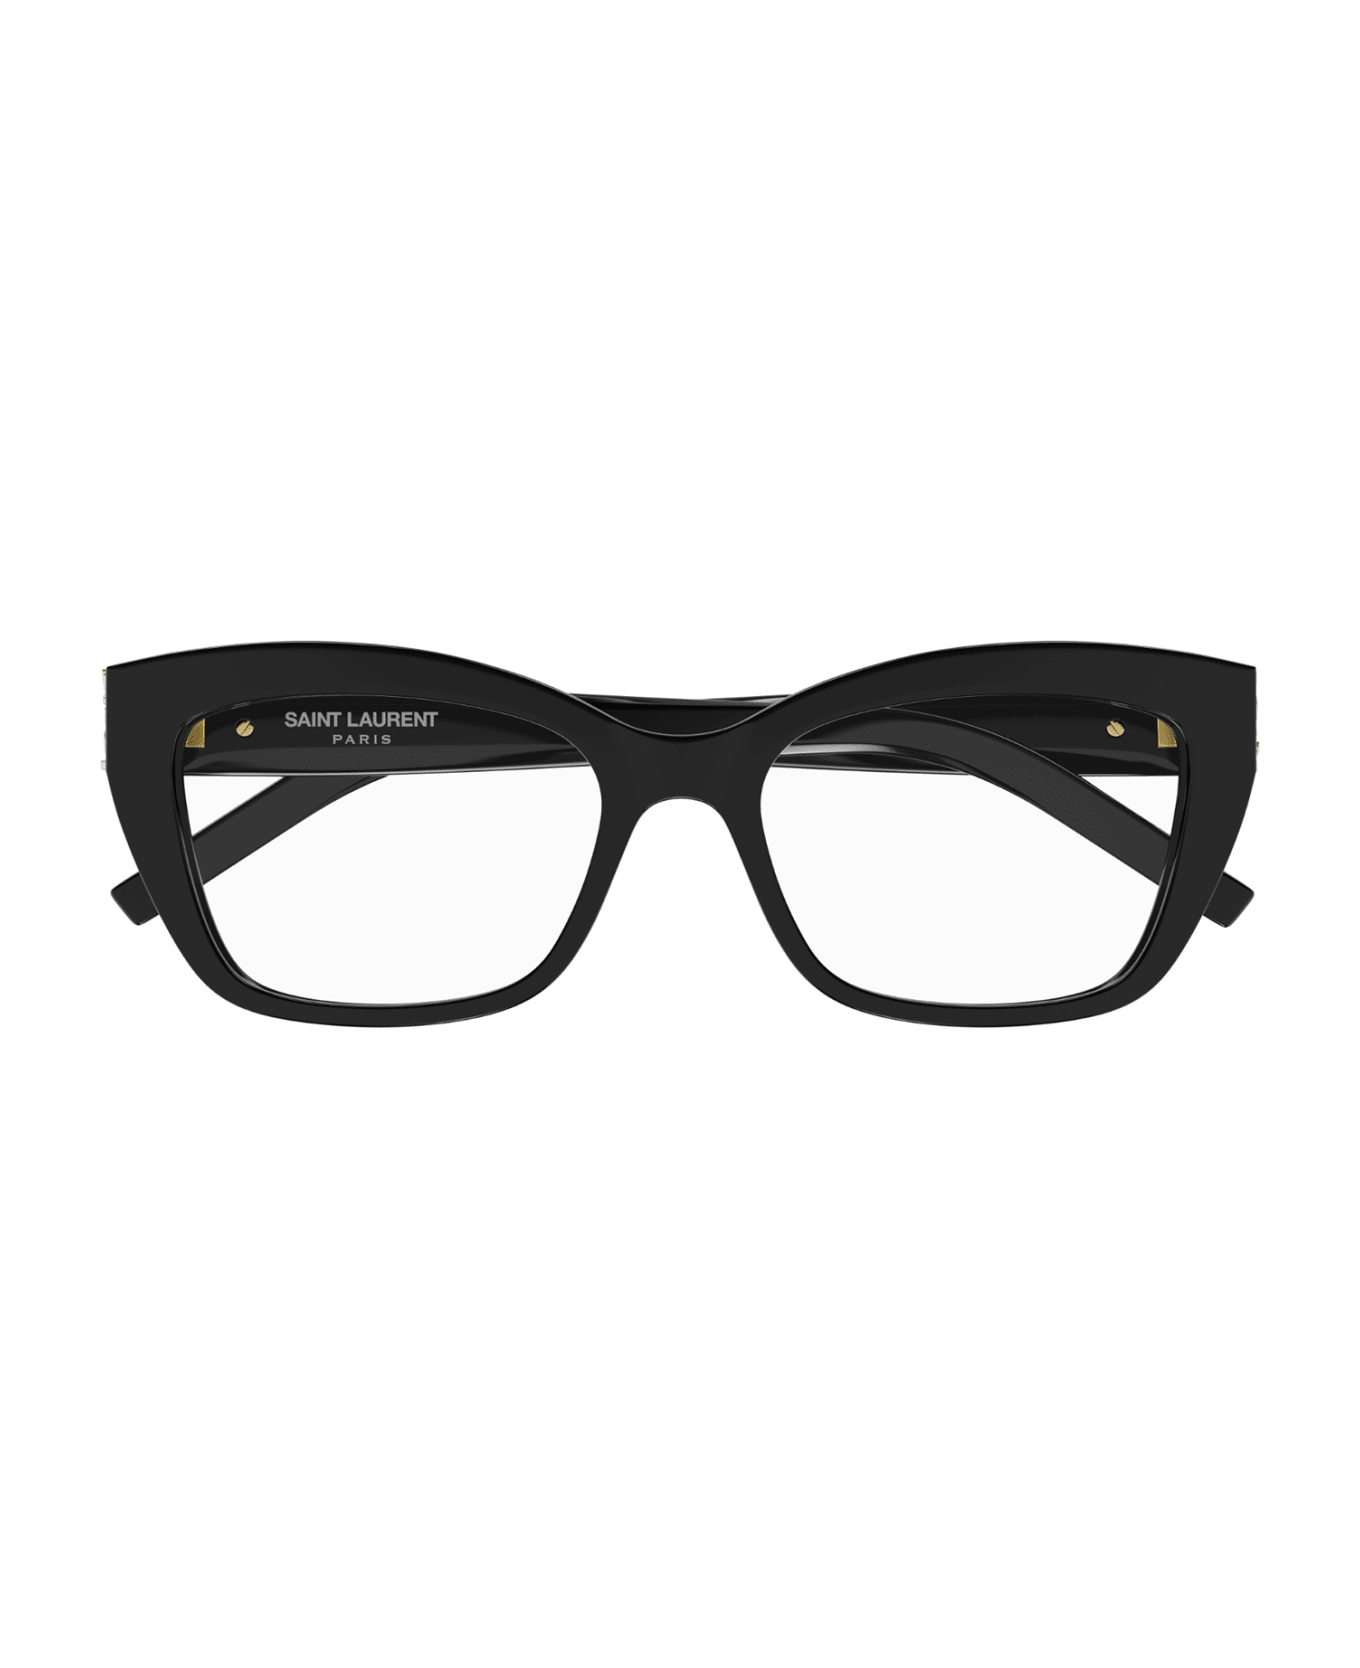 Saint Laurent Eyewear SL M117 Eyewear - Black Black Transpare